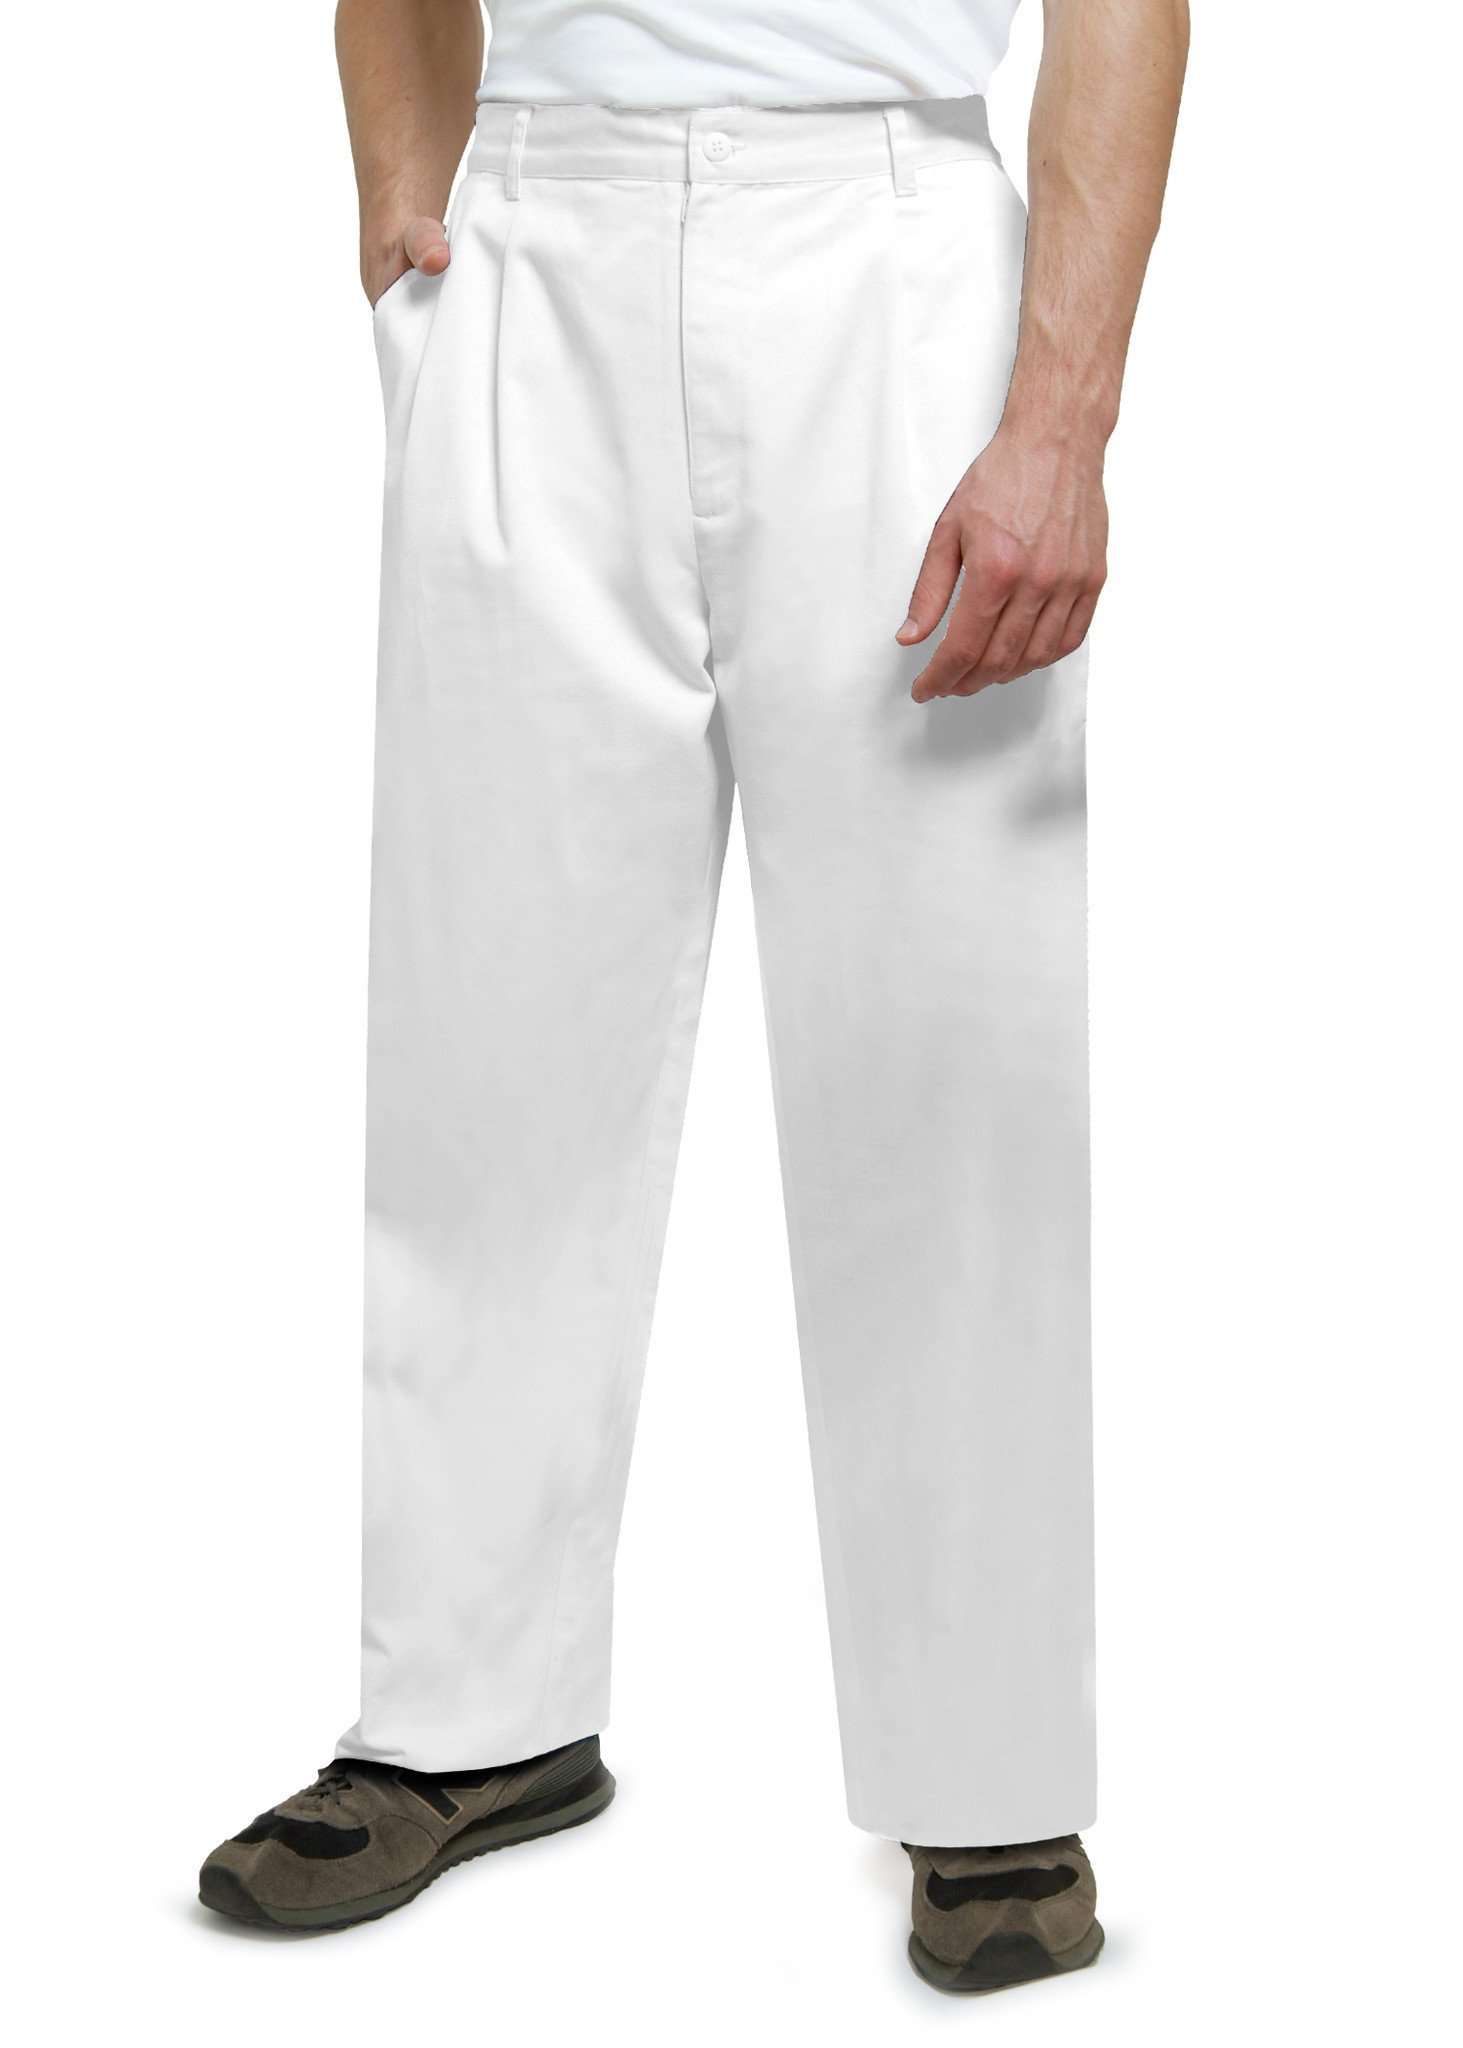  Adar - uniforms Medical Uniform Pants uniforms online Adar Universal Mens Twill Pleated Natural-Rise Tapered Leg Pants w/Waistband - SchoolUniforms.com